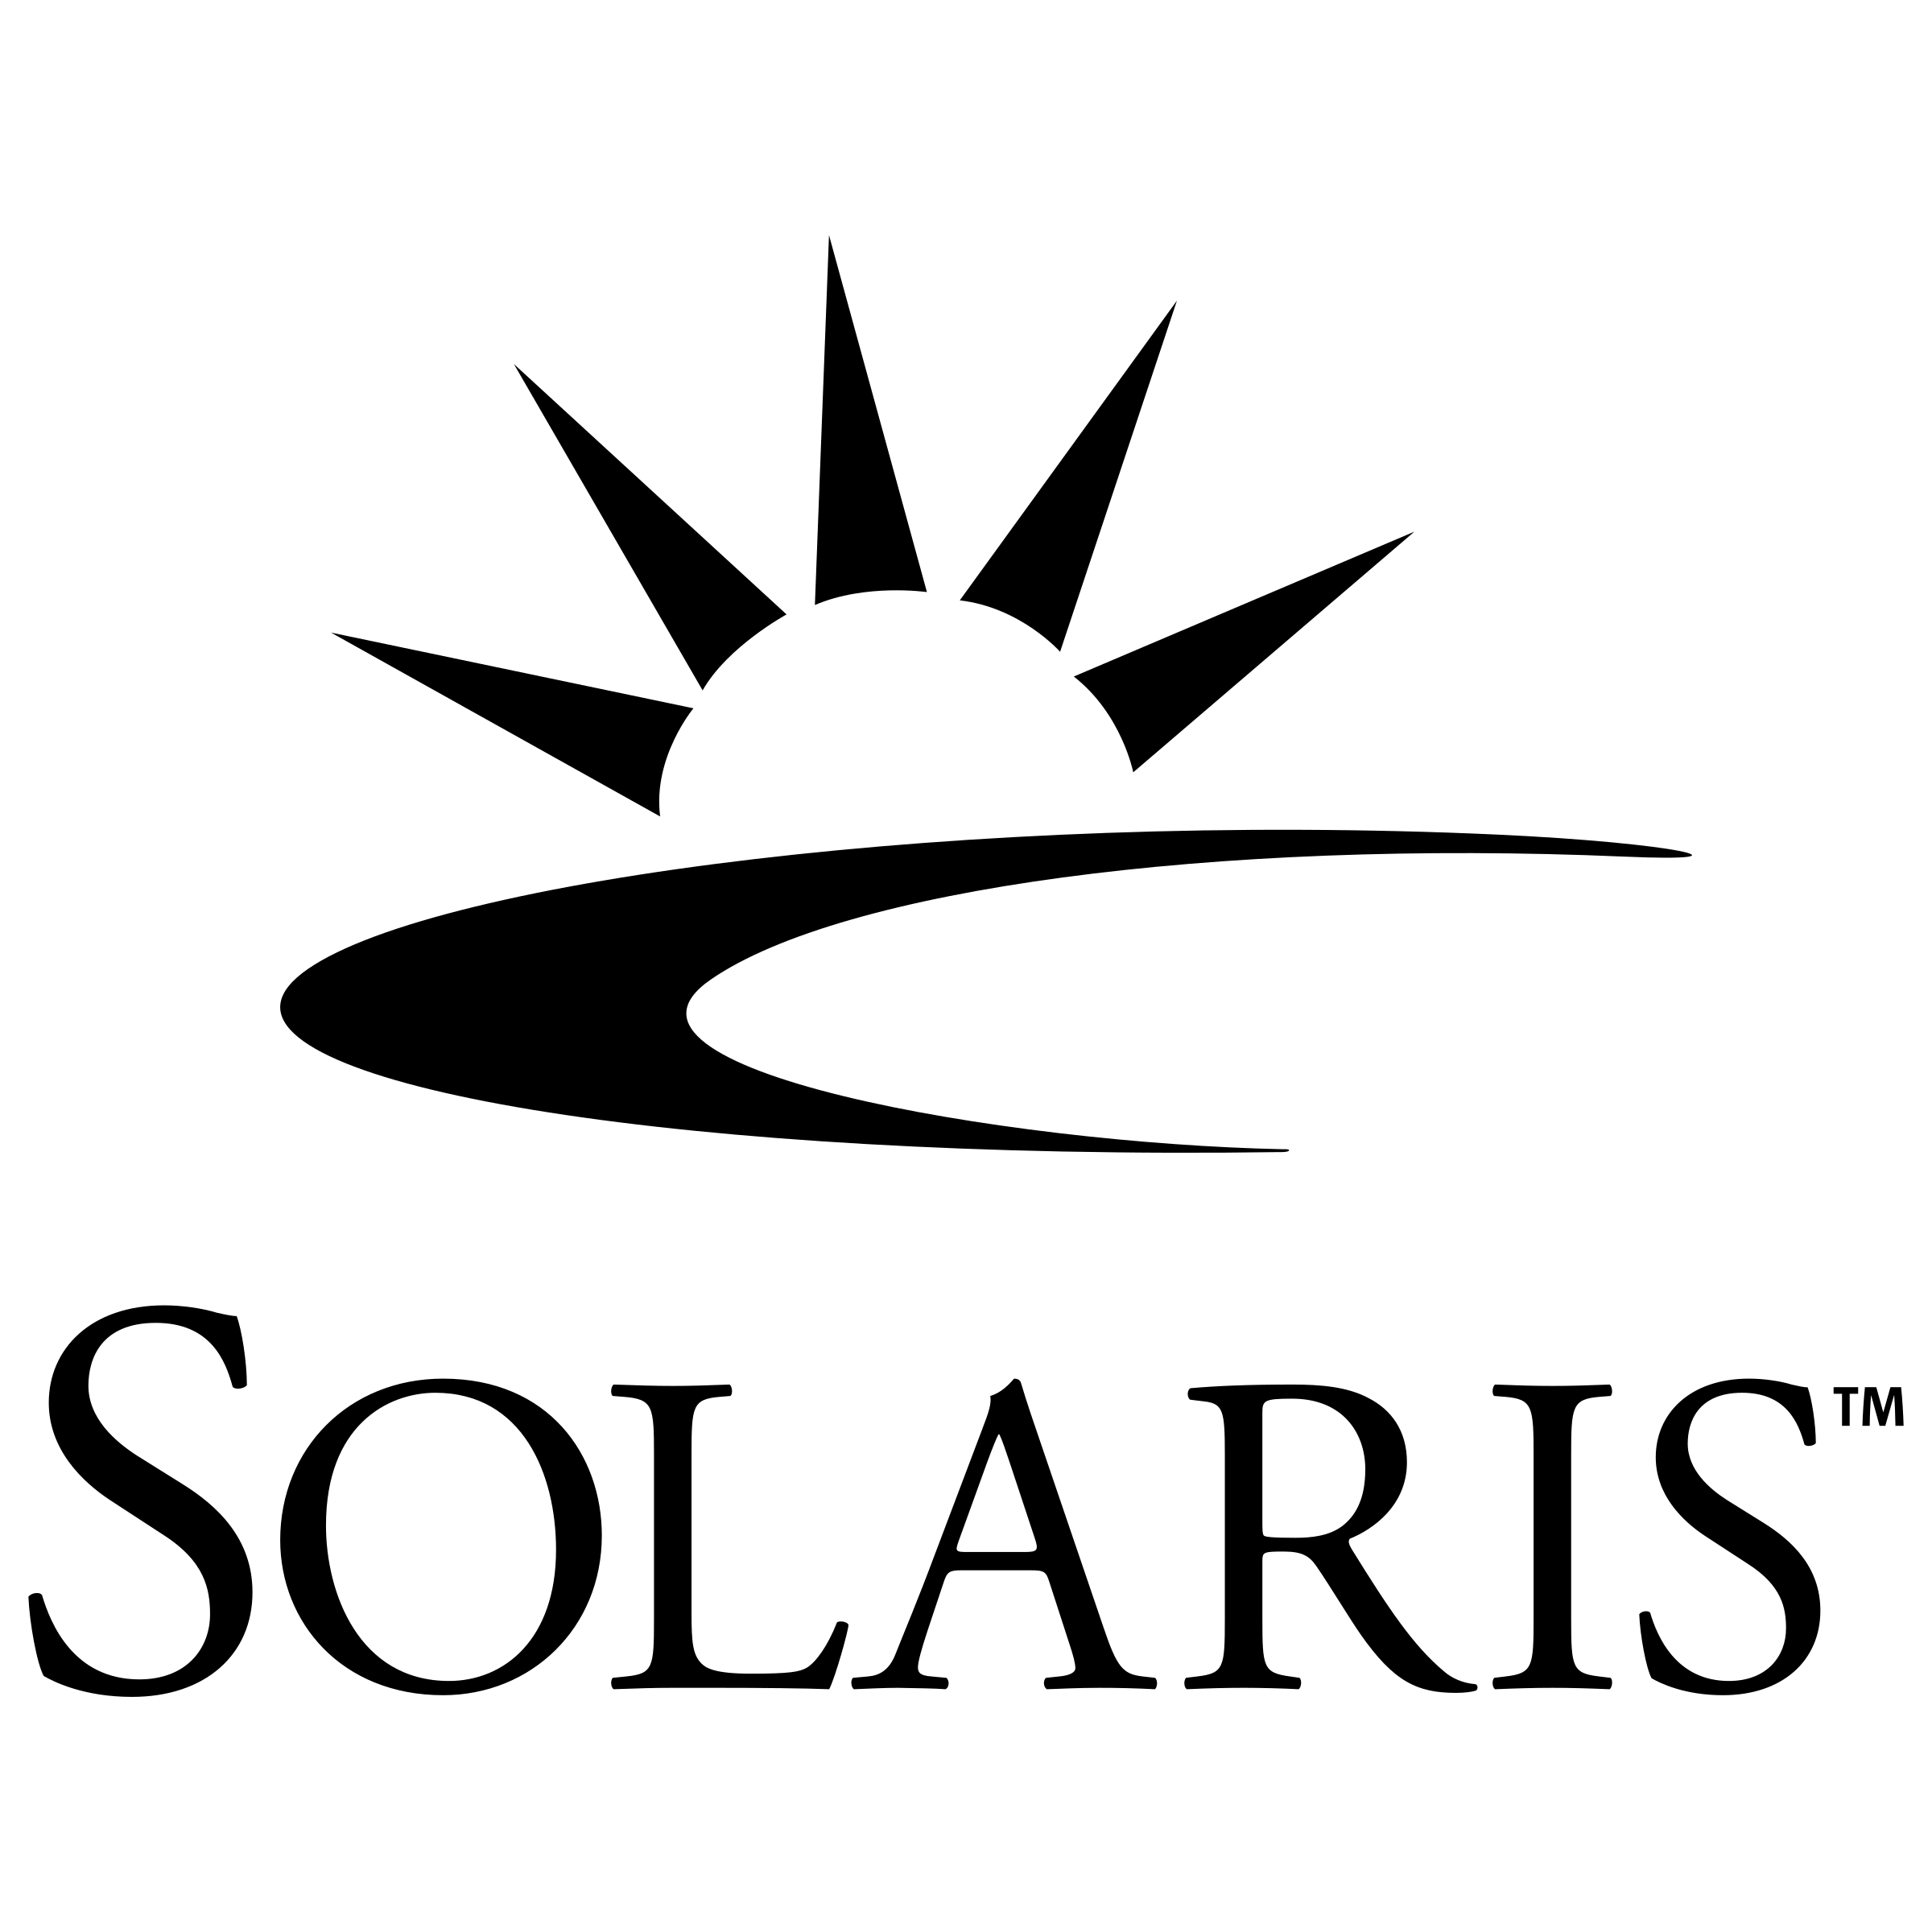 Solaris Logo - Solaris Logo PNG Transparent & SVG Vector - Freebie Supply